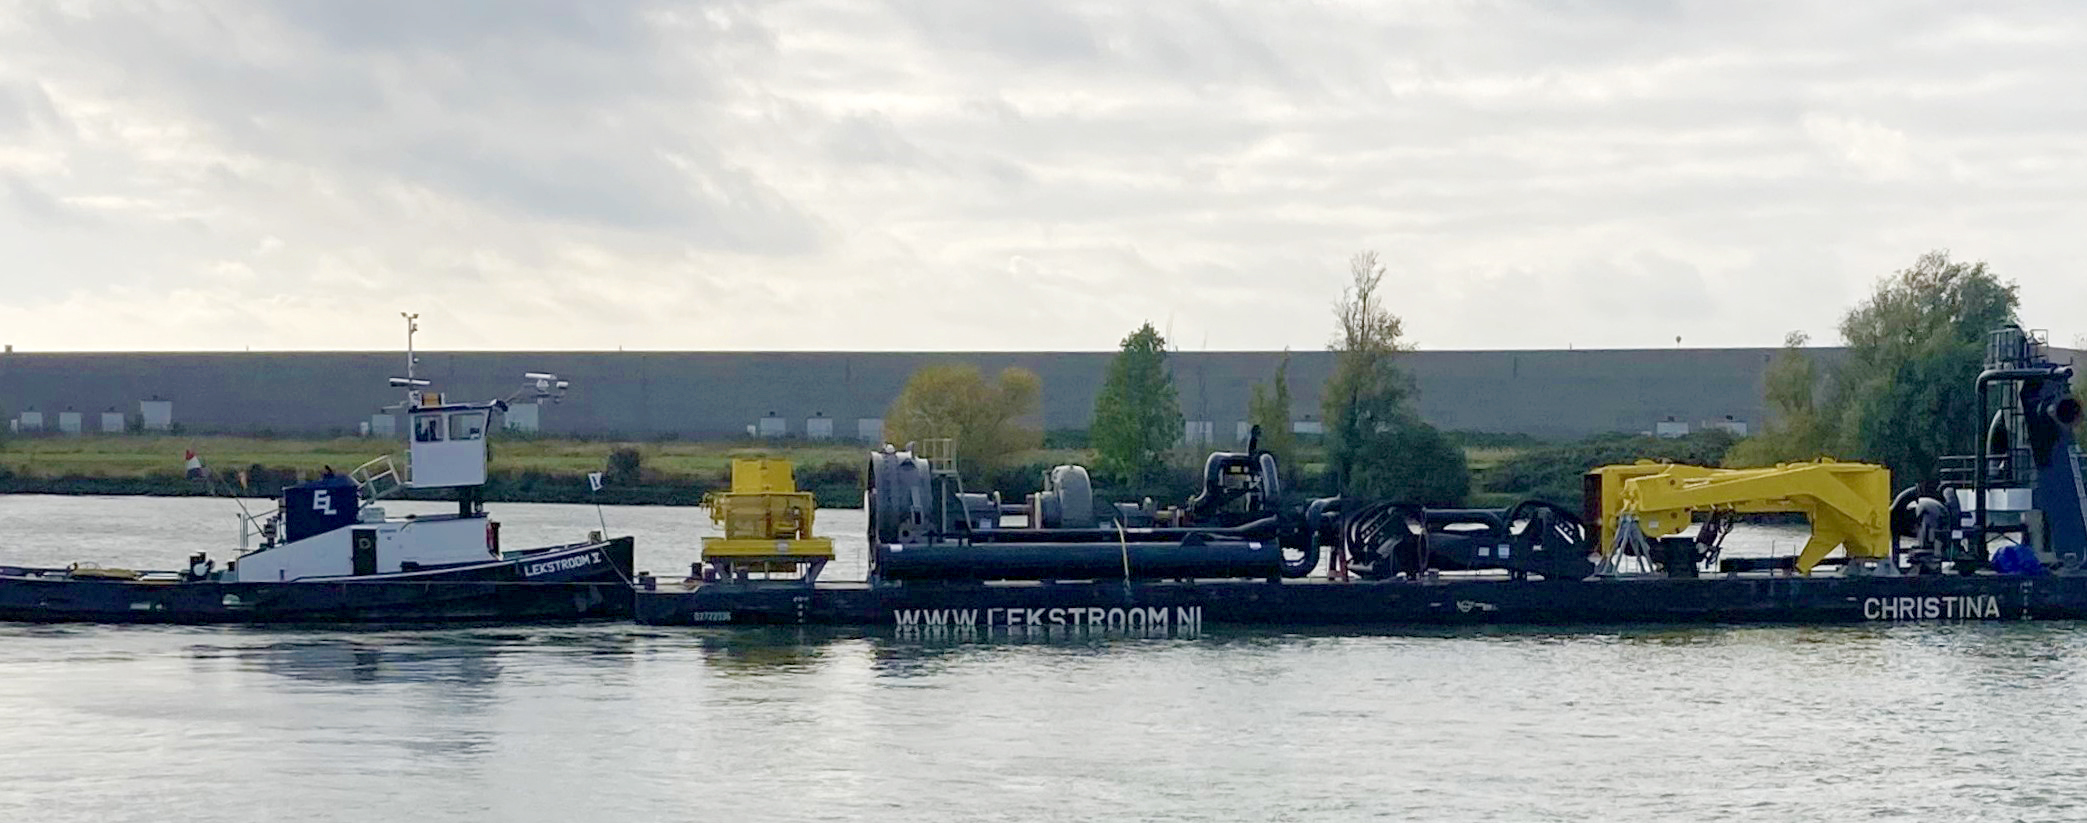 Lekstroom barge CHRISTINA on its way to Rotterdam